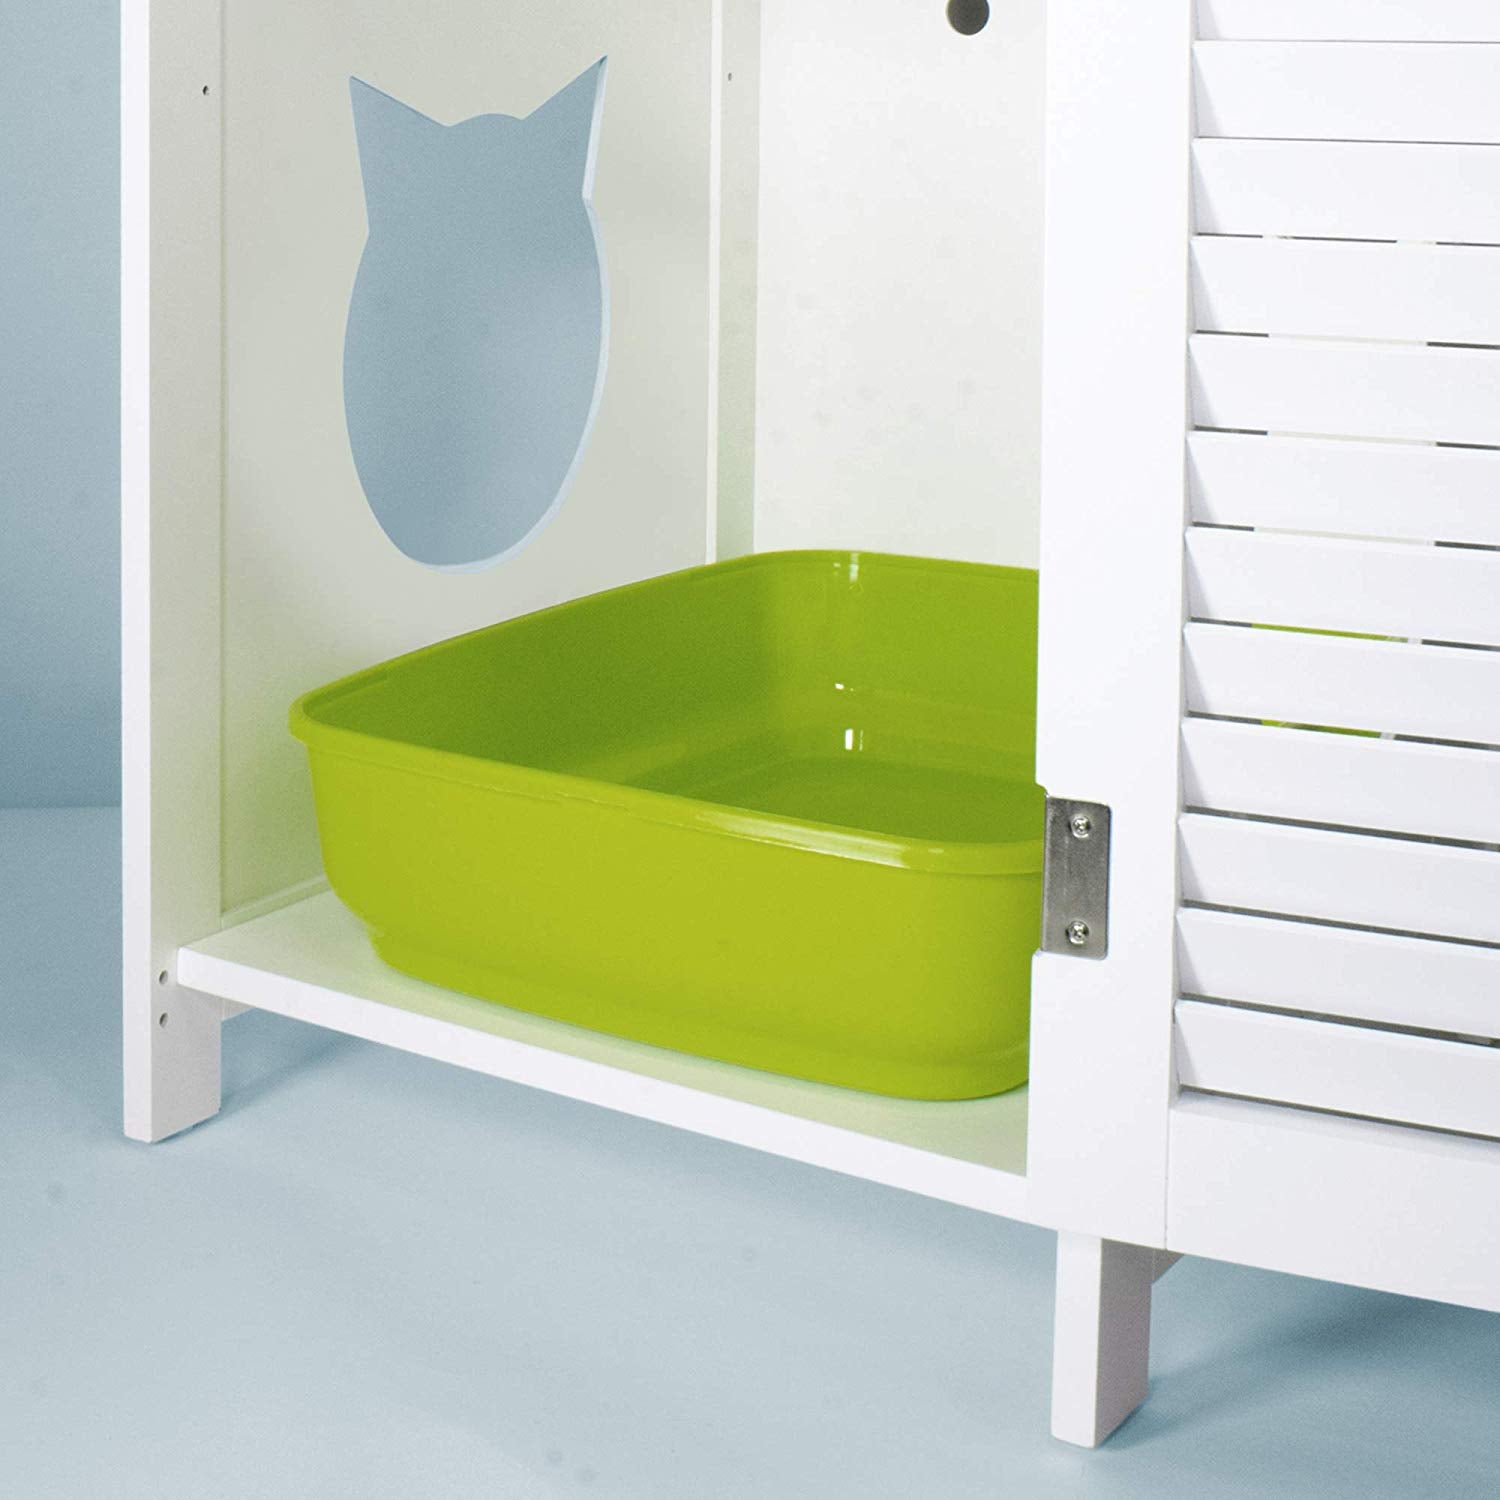 Penn-Plax Cat Walk Furniture: Contemporary Home Cat Litter Enclosure - White